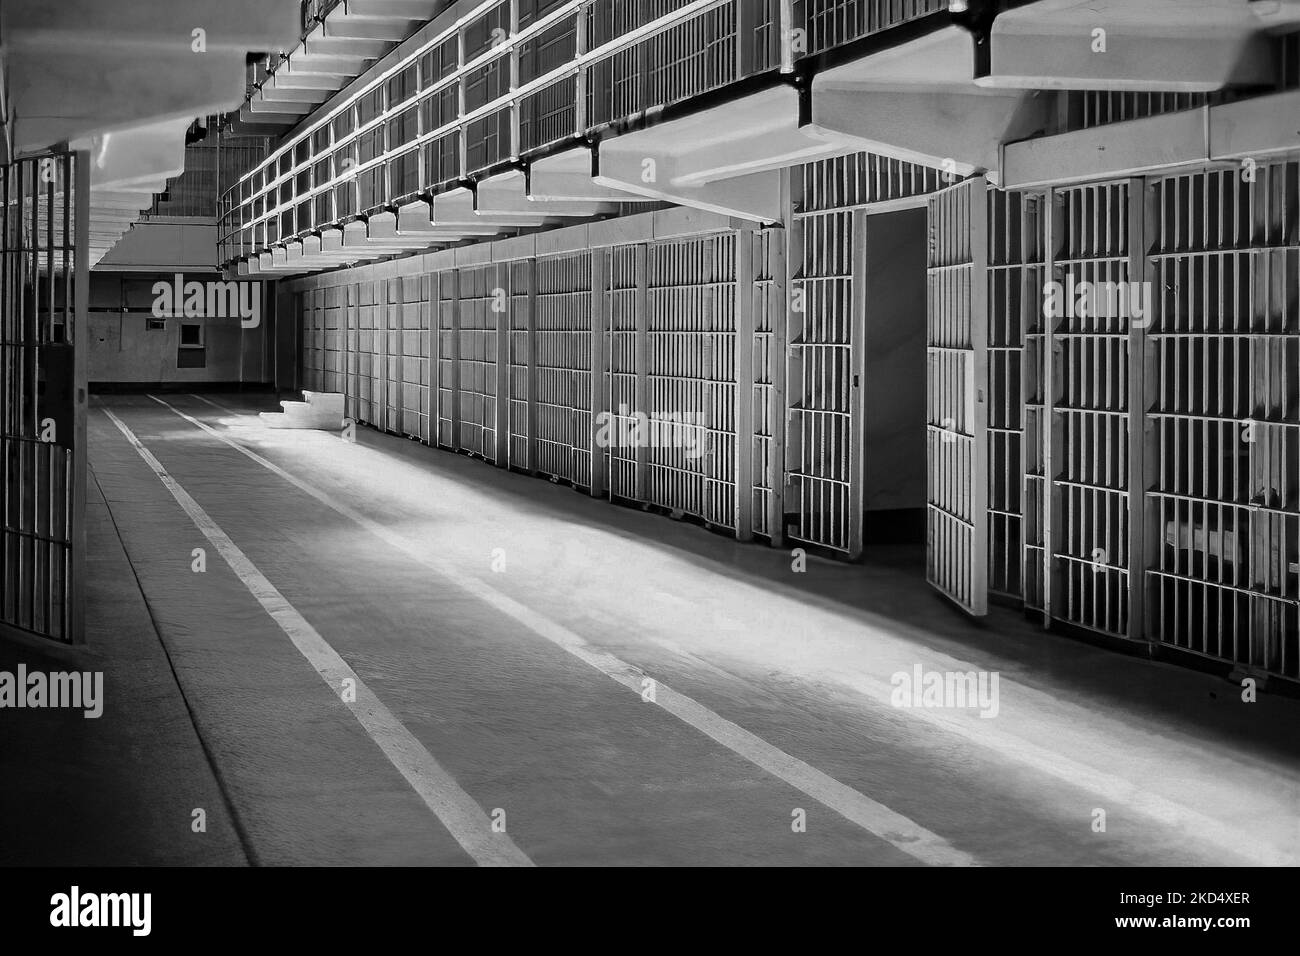 Inside Alcatraz prison Cell Block C, San Francisco, United States - June, 1982 , San Francisco historical landmark. Black and White Photograph. Stock Photo